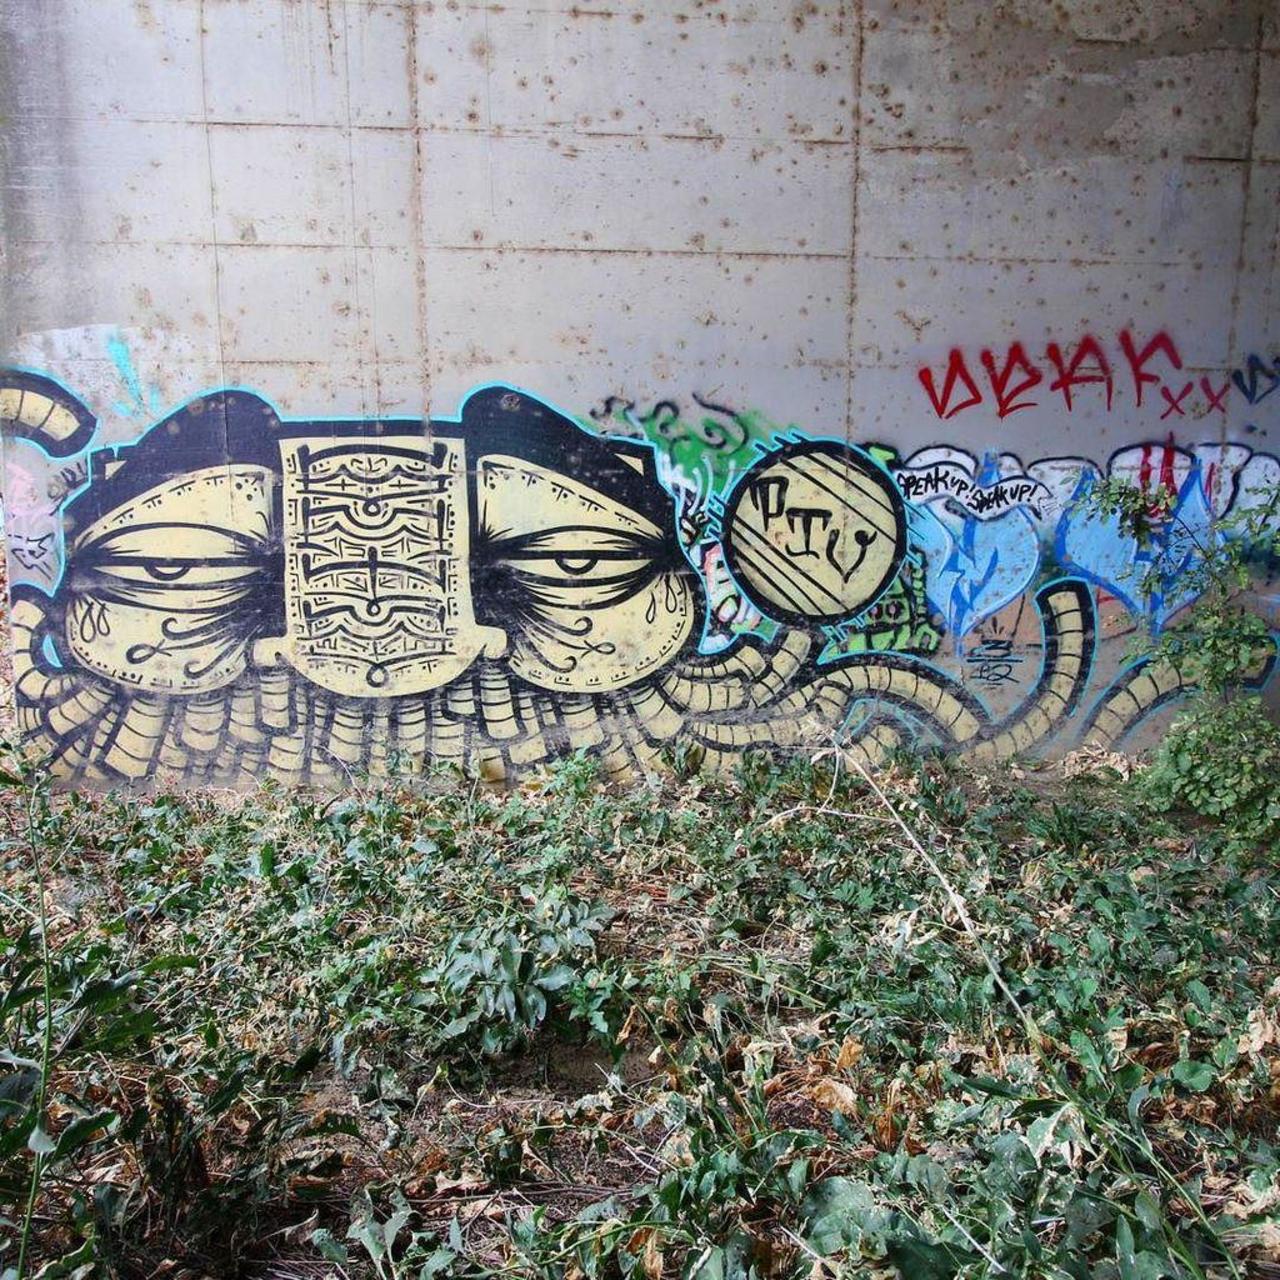 RT @artpushr: via #dave_n_rachel "http://ift.tt/1iDC6HU" #graffiti #streetart http://t.co/OQI0FezTAN